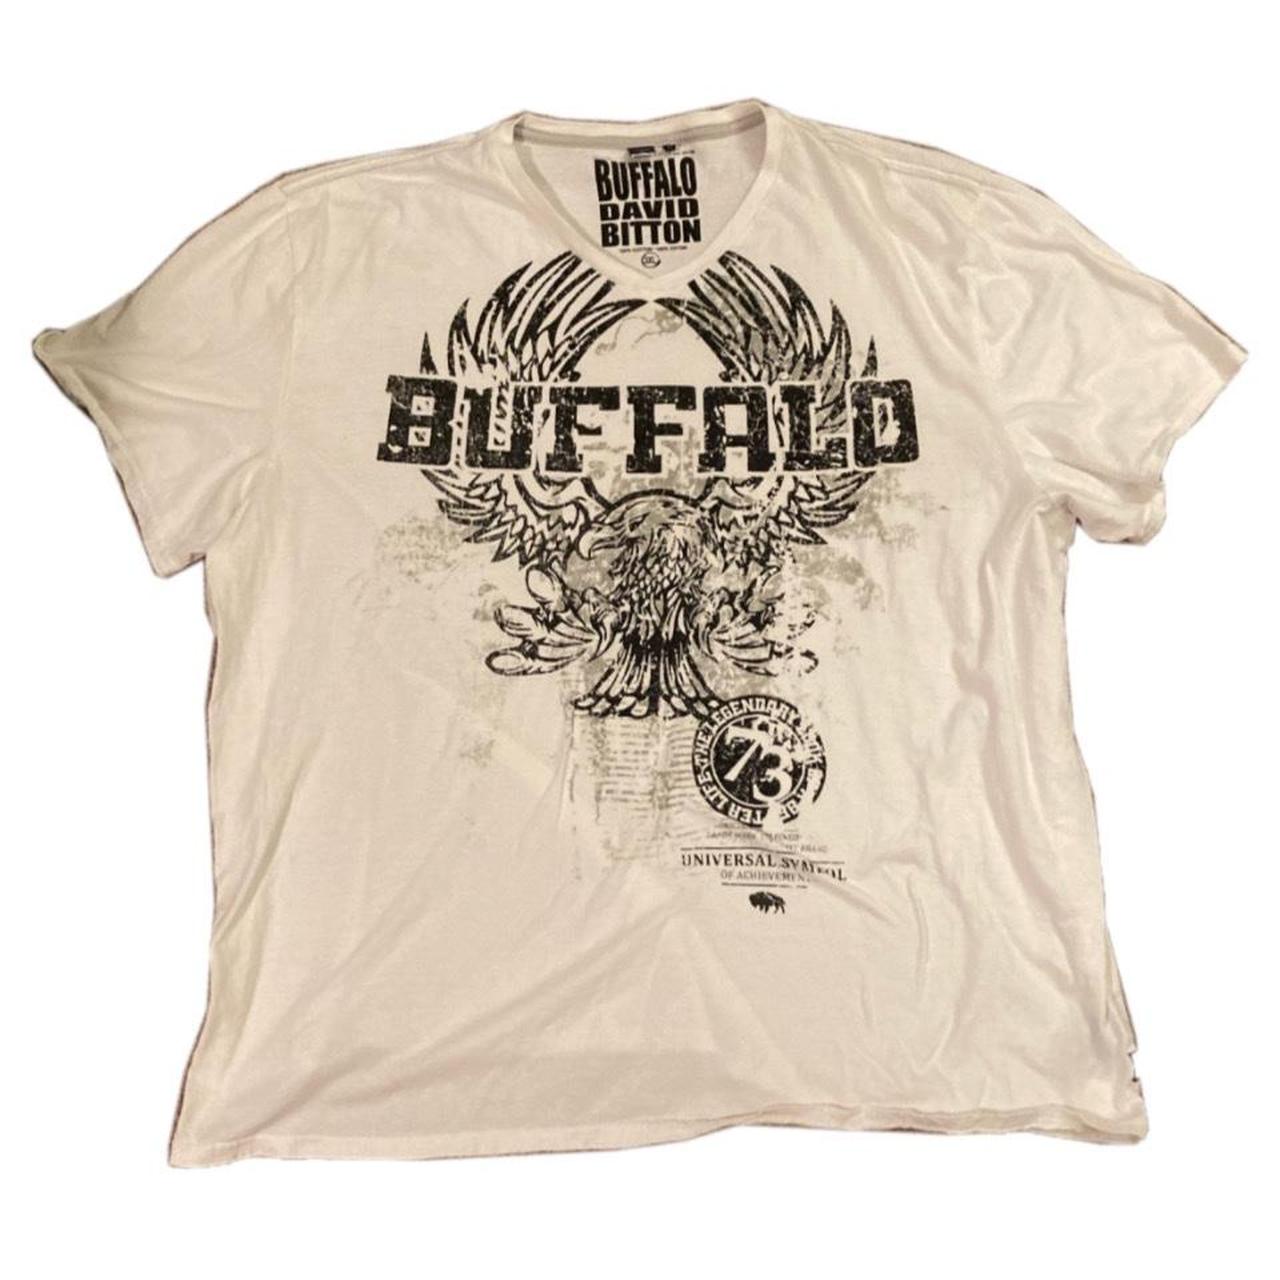 Buffalo David Bitton Men's White and Black T-shirt